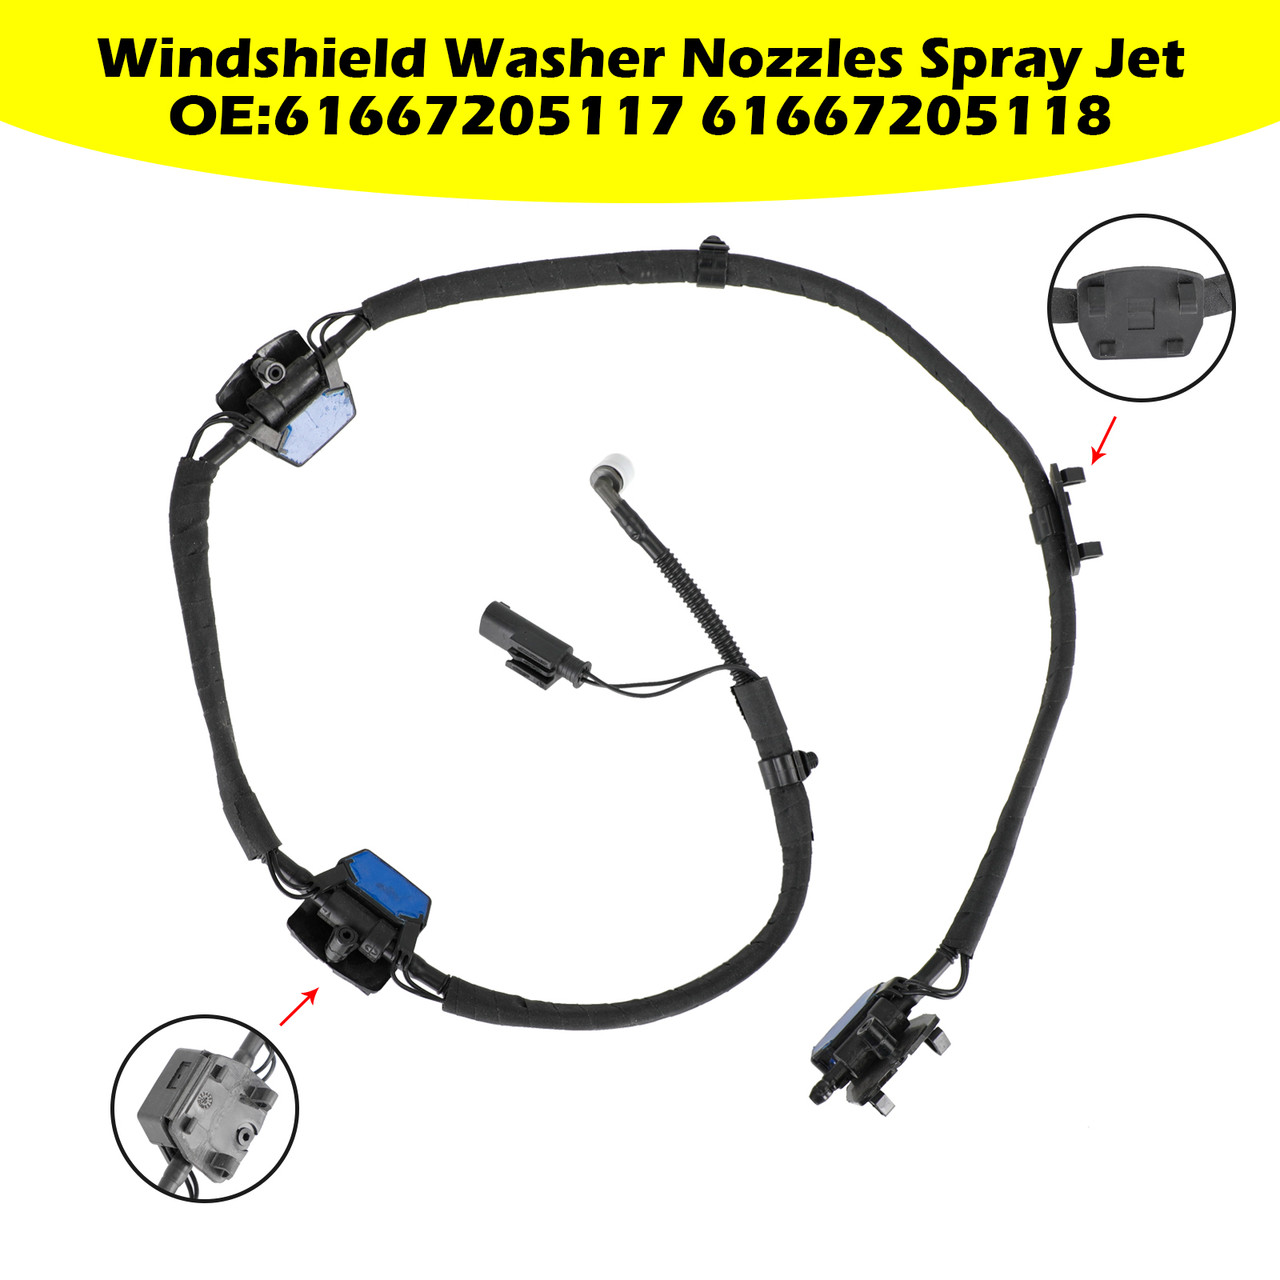 Windshield Washer Nozzles Spray Jet for BMW F10 F11 F18 61667205117 61667205118